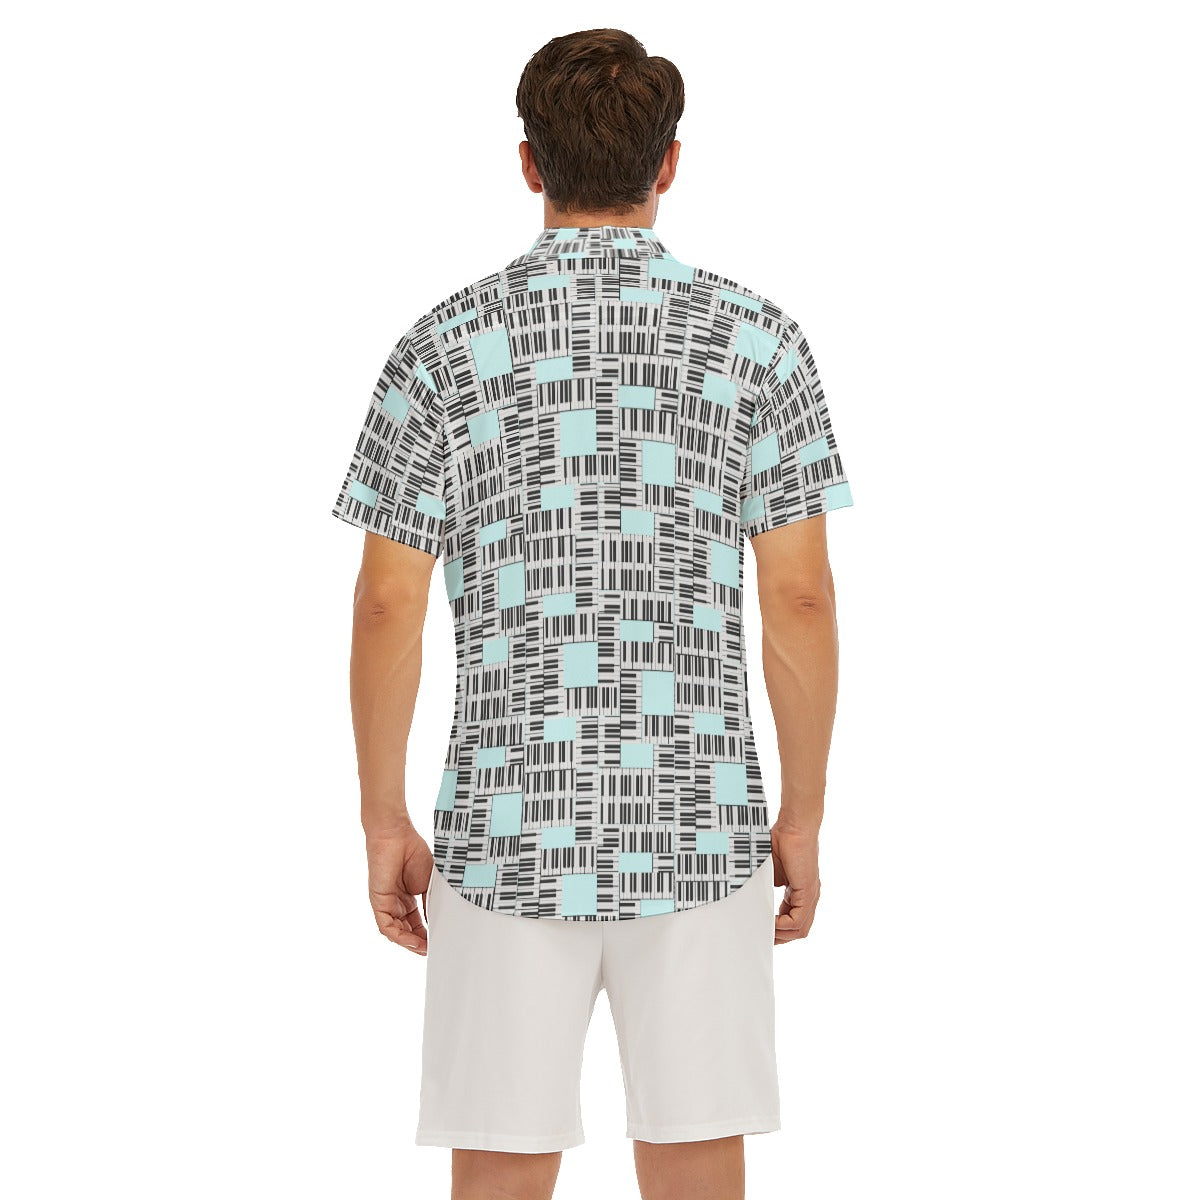 Liberace Piano Key Pattern Men's Button-down short sleeve shirt